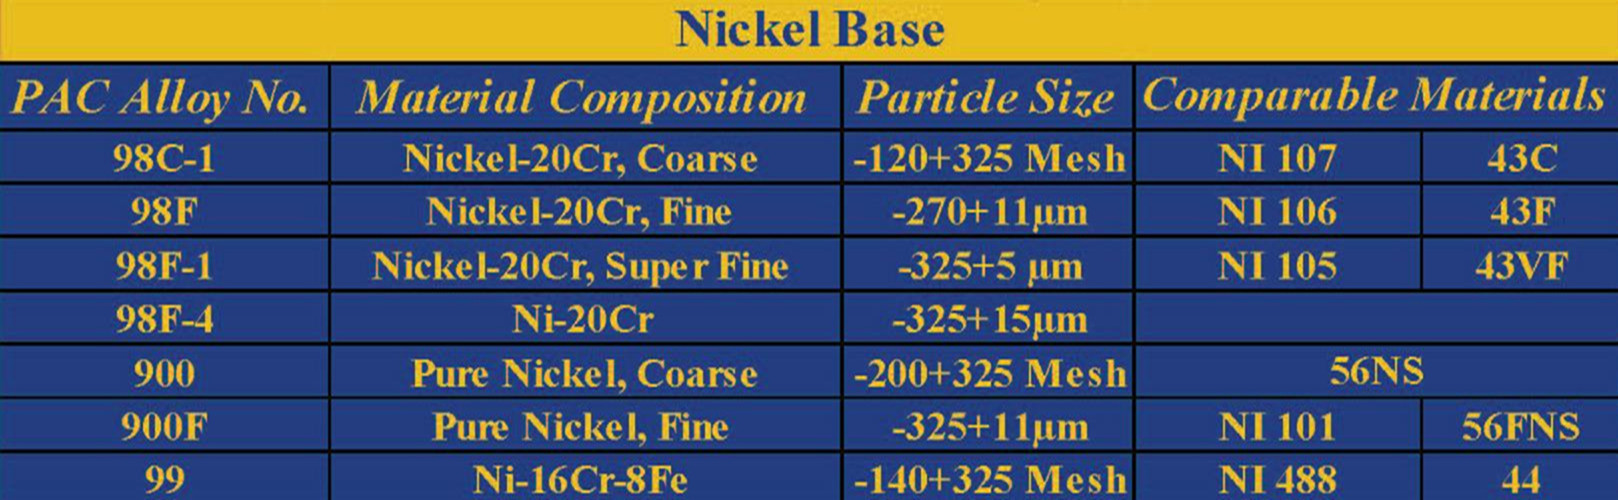 Nickel Base